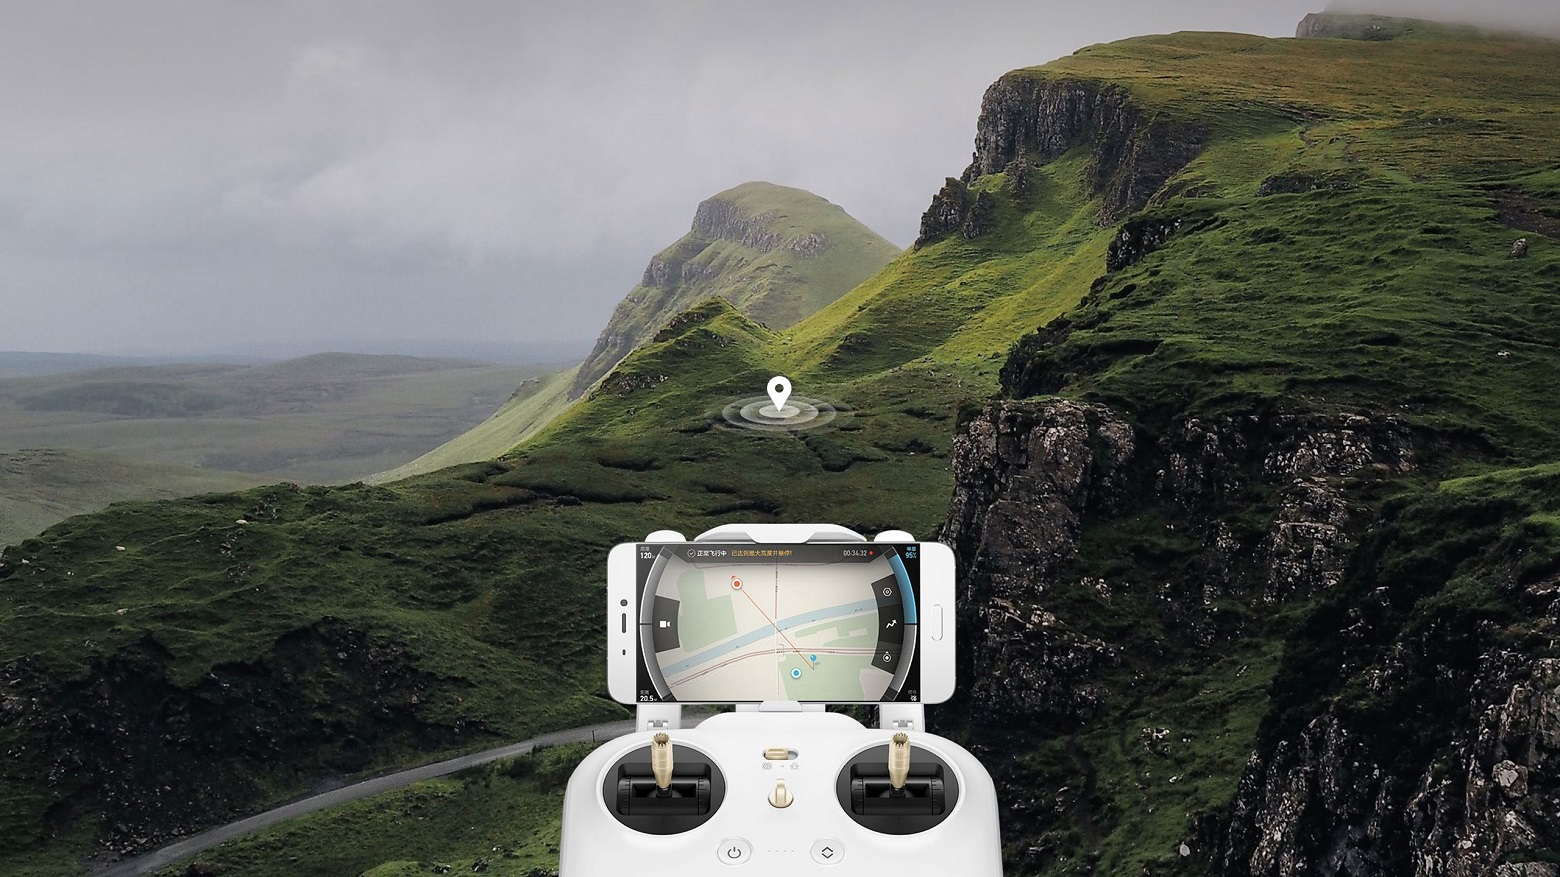 Xiaomi Mi UAV Drone 